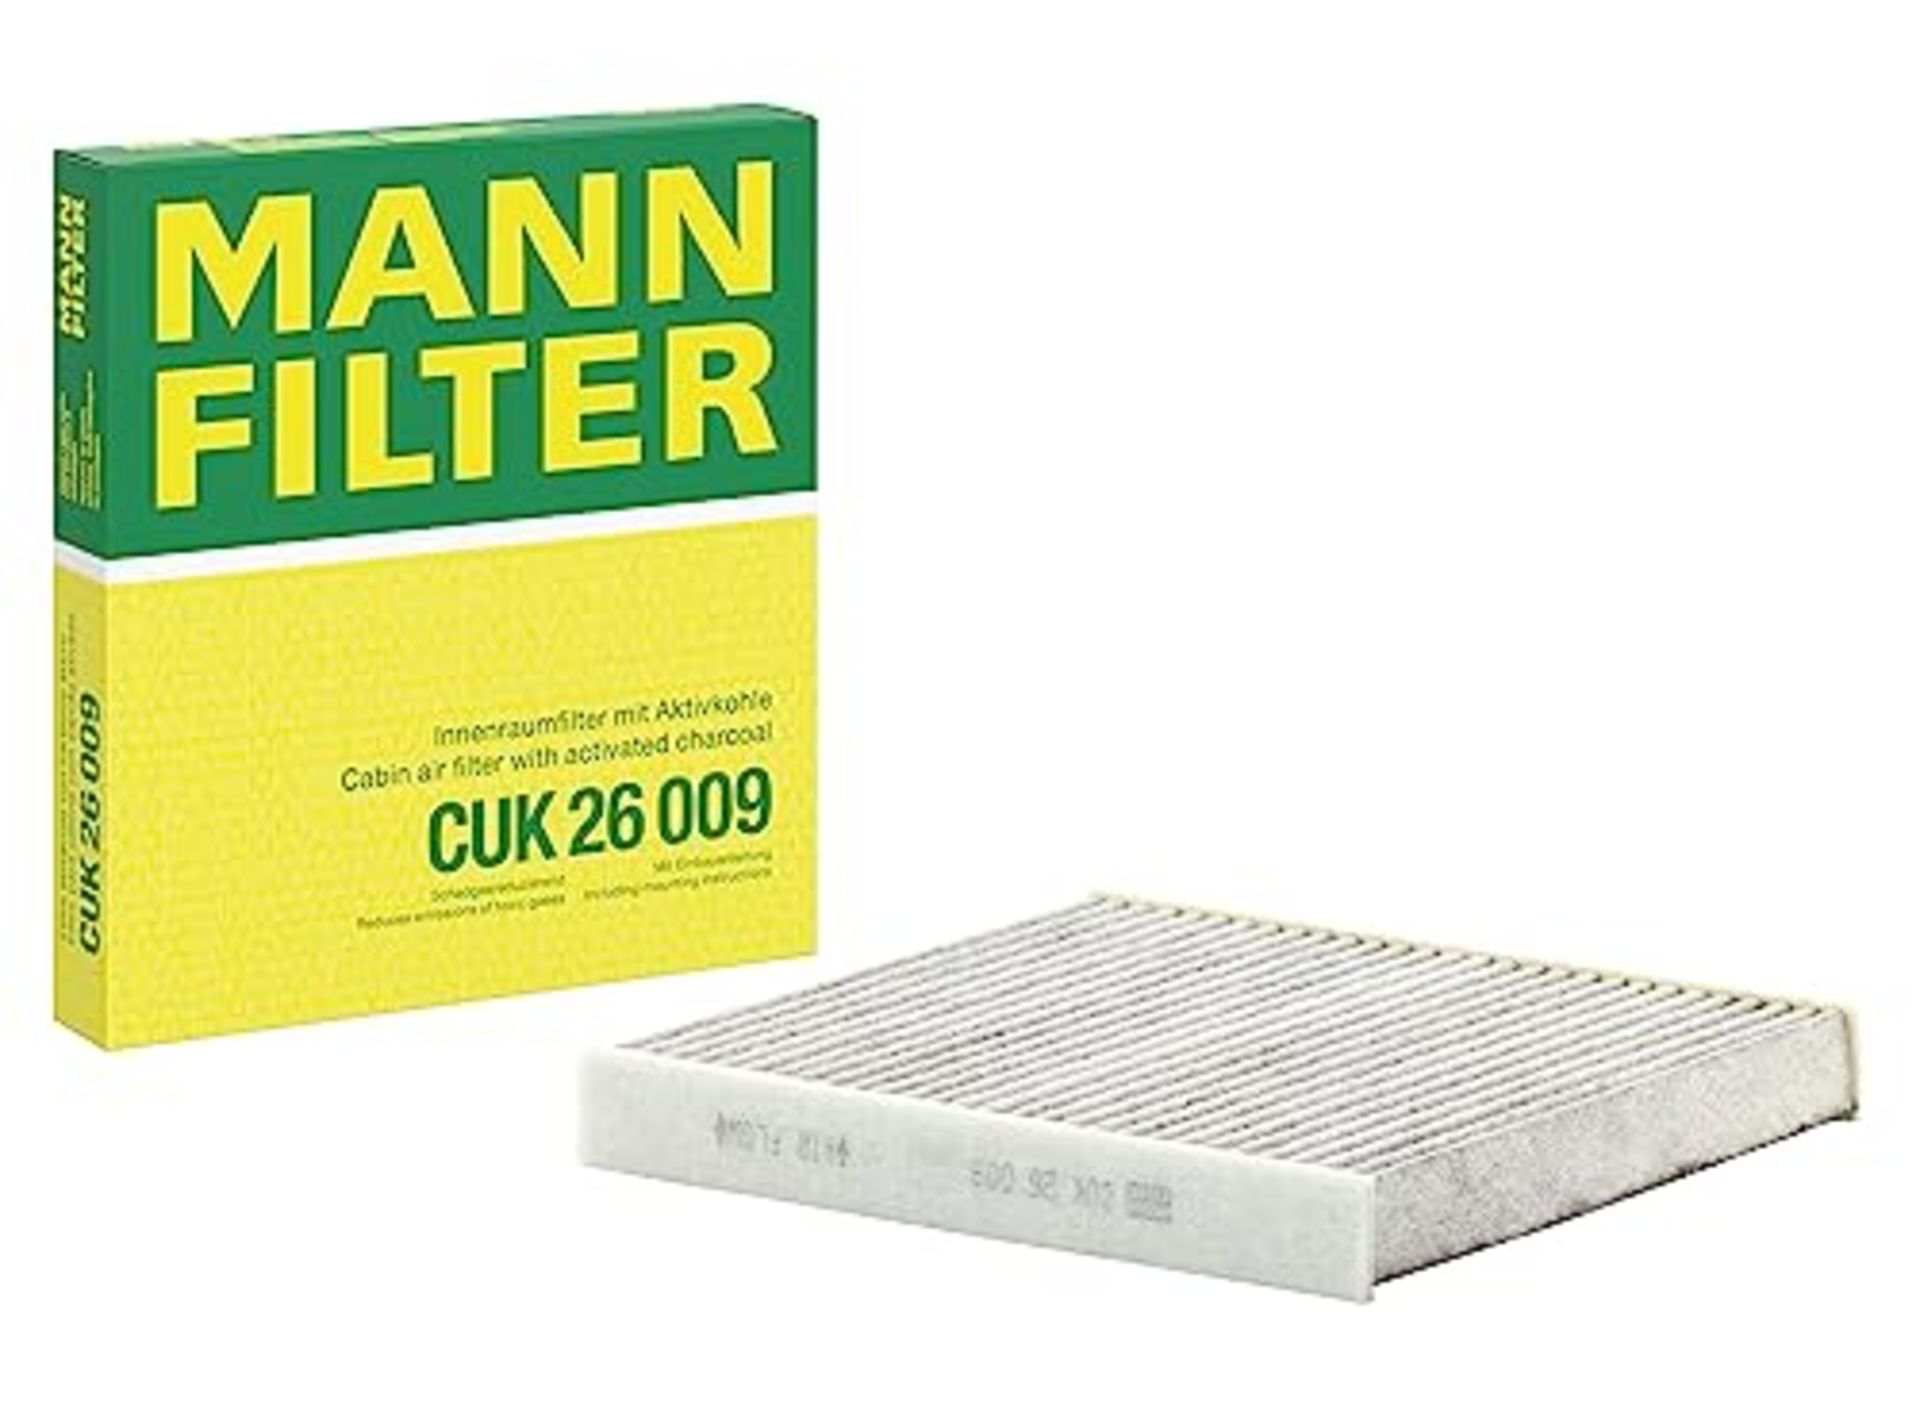 MANN-FILTER CUK 26 009 Cabin Air Filter - Pollen Filter with Activated Carbon - For Ca - Bild 4 aus 6